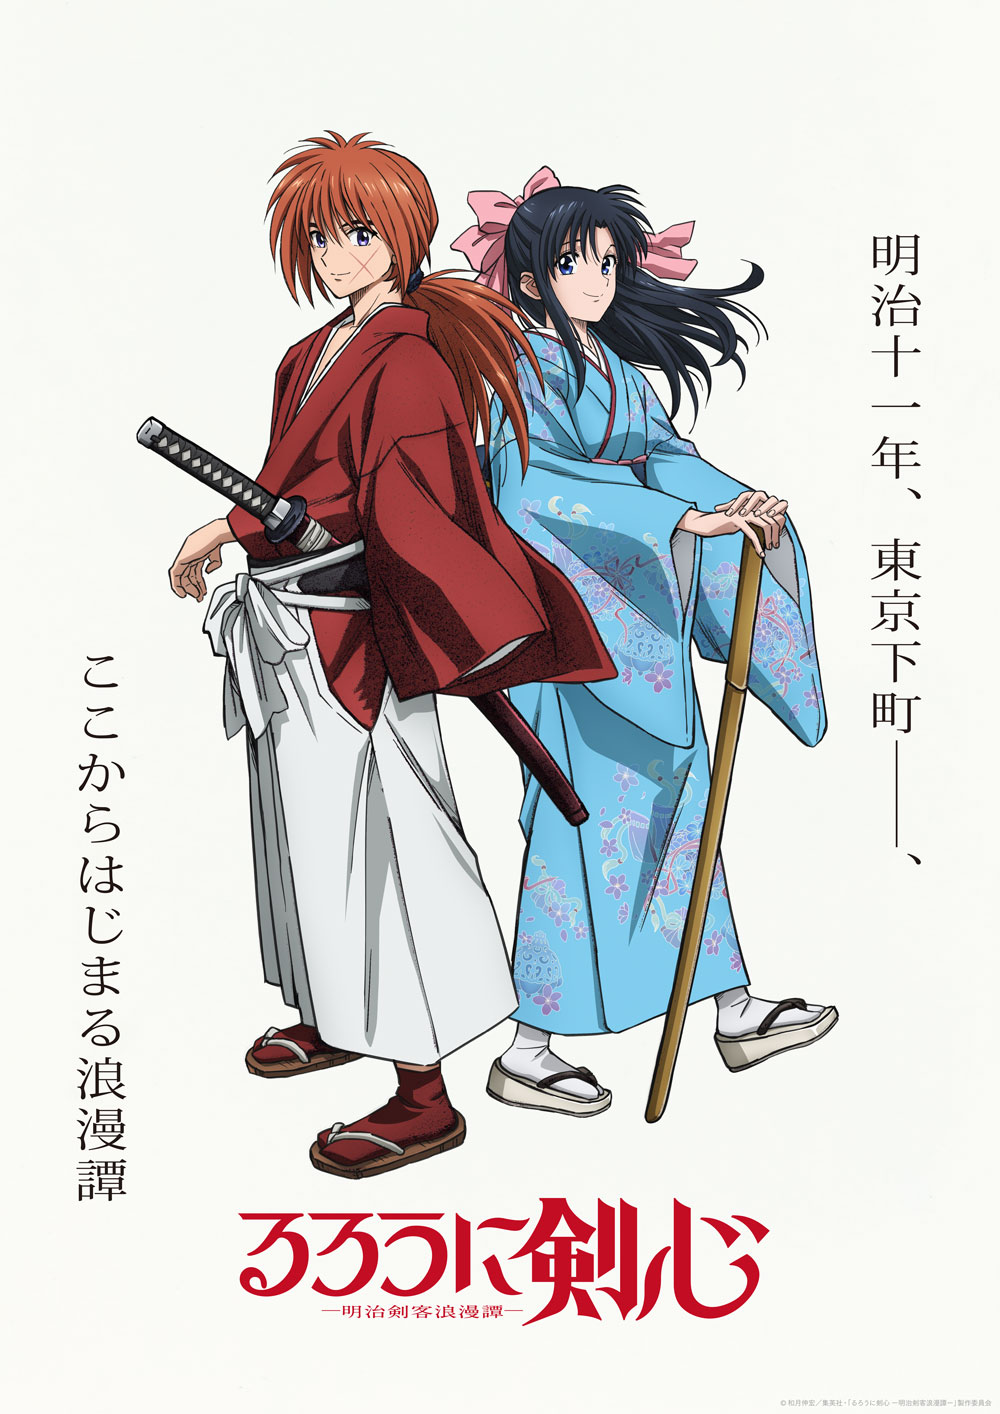 Rurouni Kenshin Specials – Shinsengumi Fansite